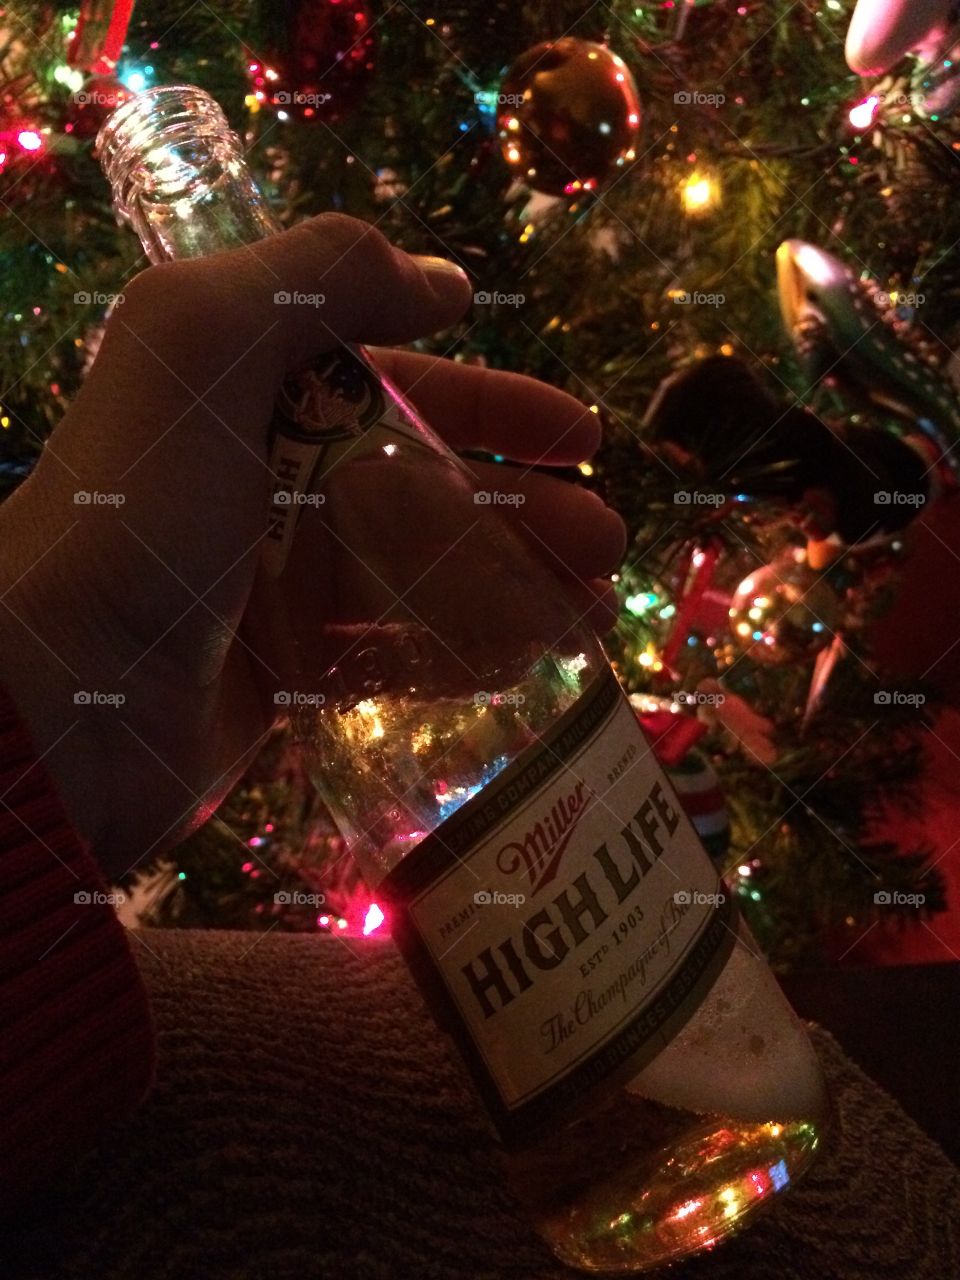 Beer and Christmas 